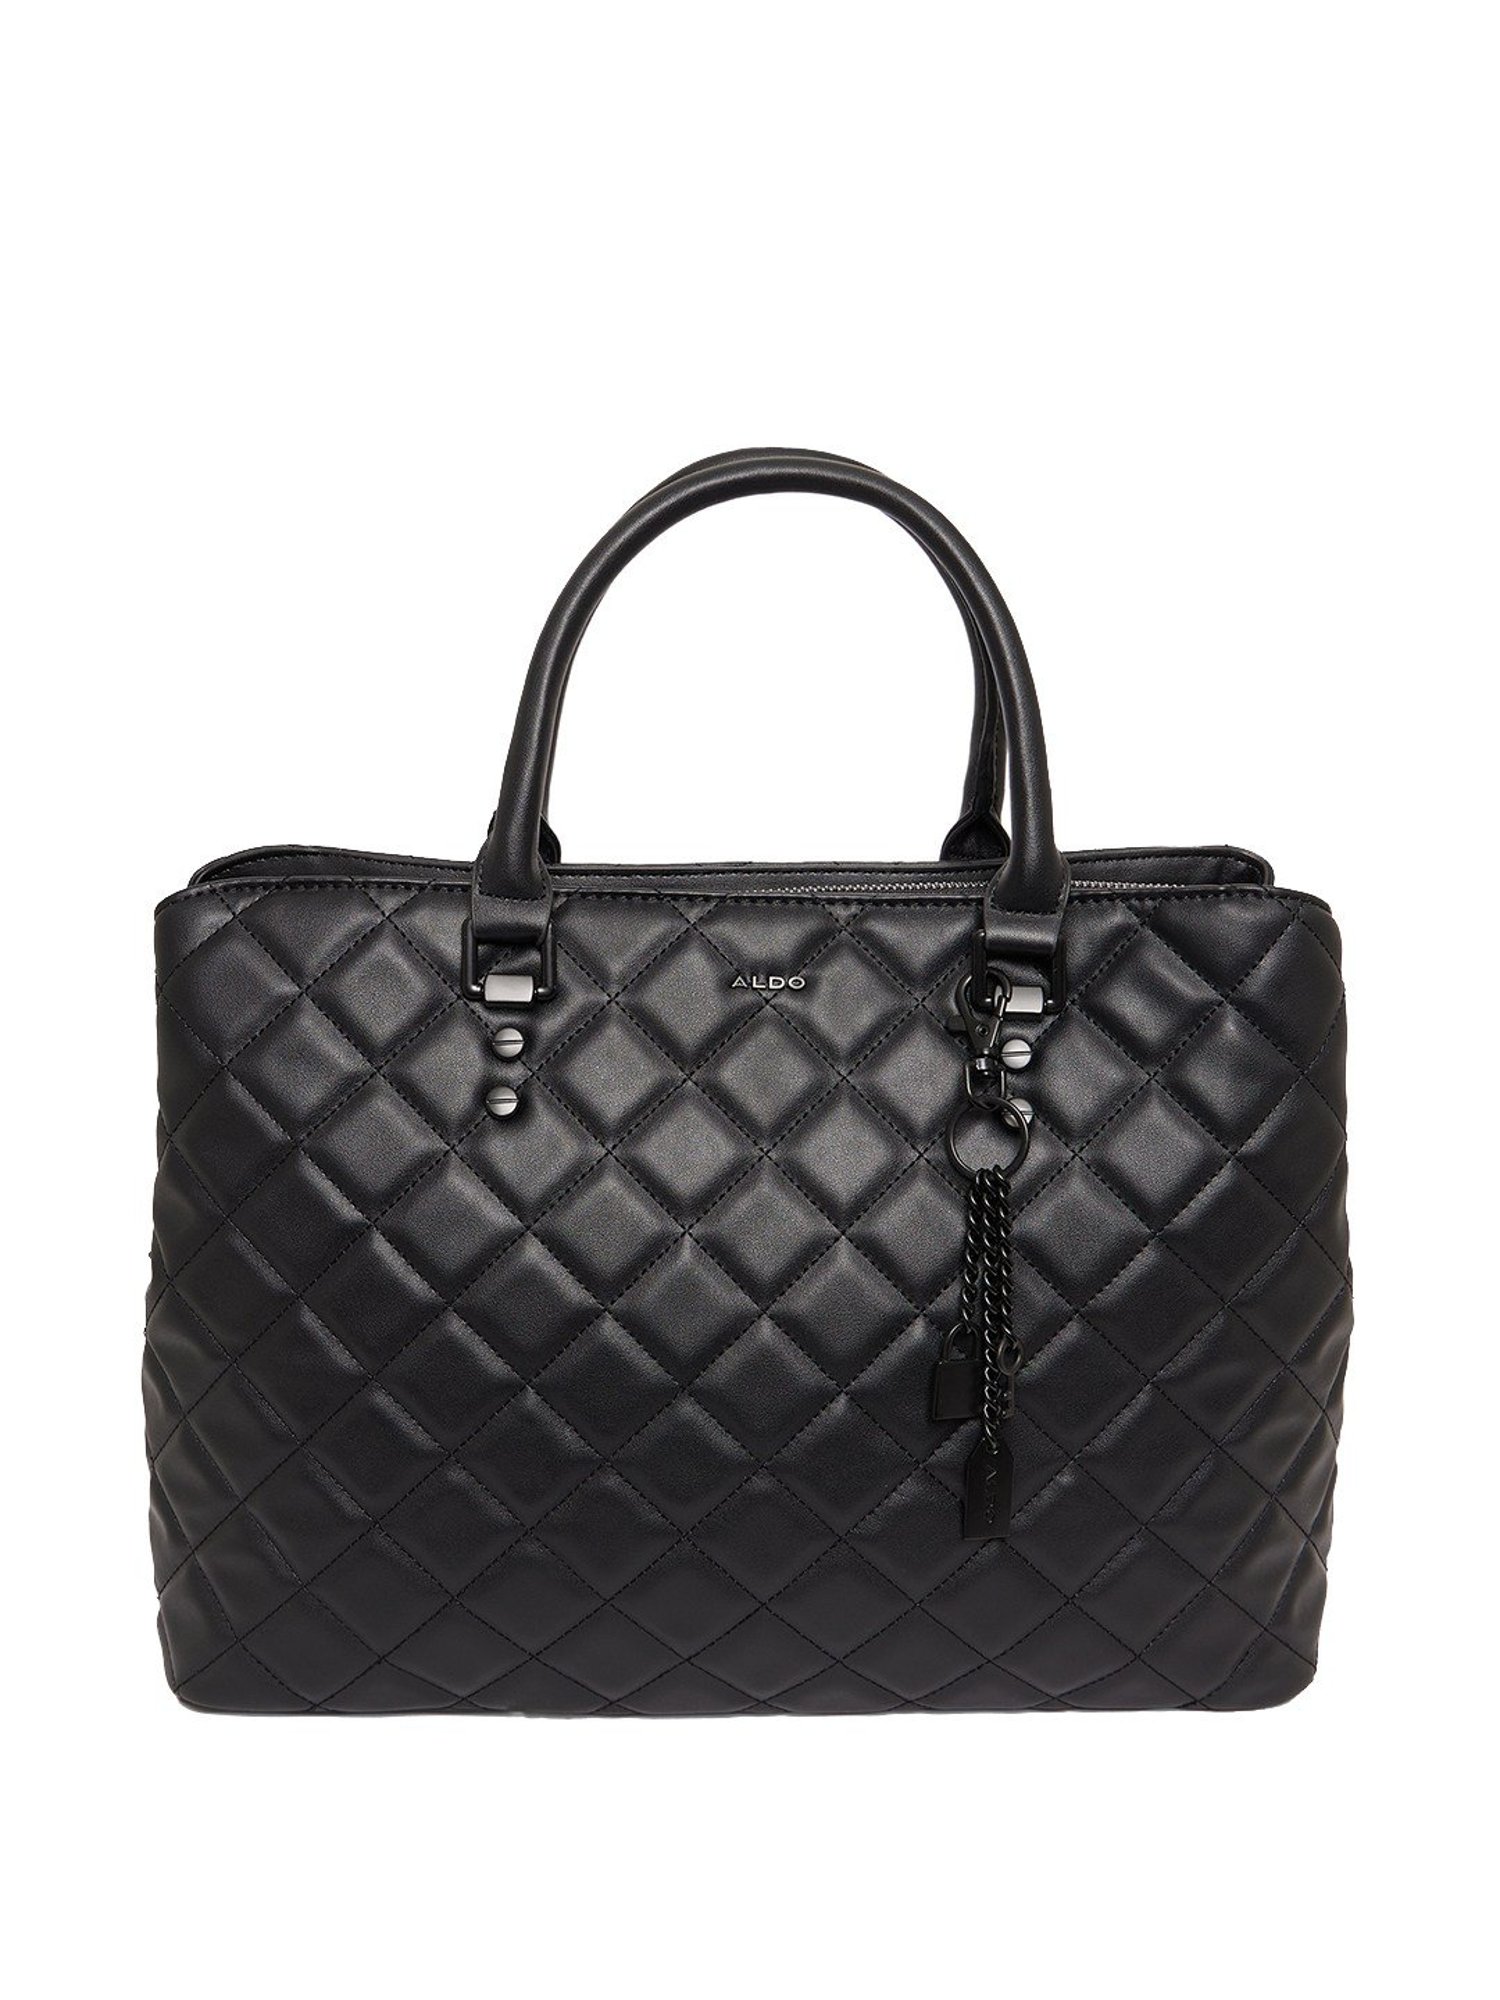 No Boundaries Women's Contemporary Top Handle Handbag, Black - Walmart.com